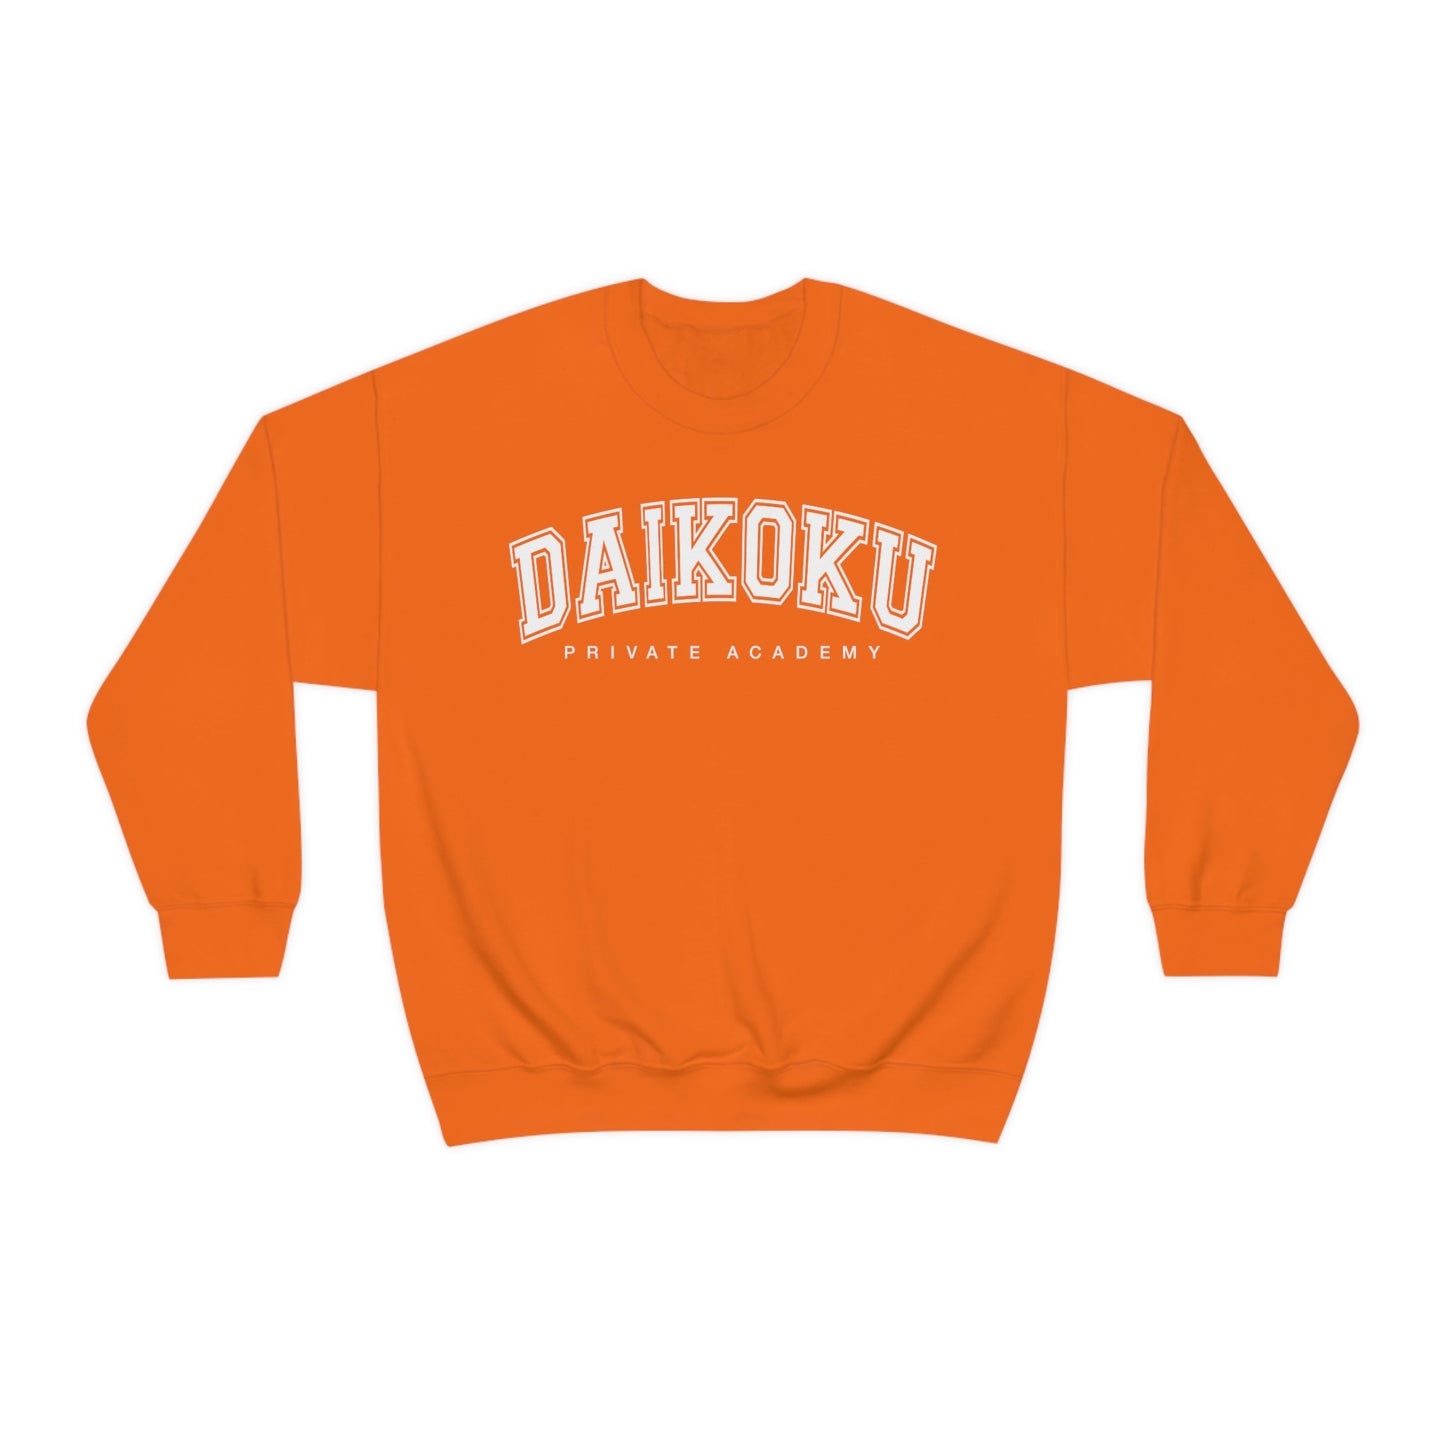 Daikokus sweatshirt crew neck